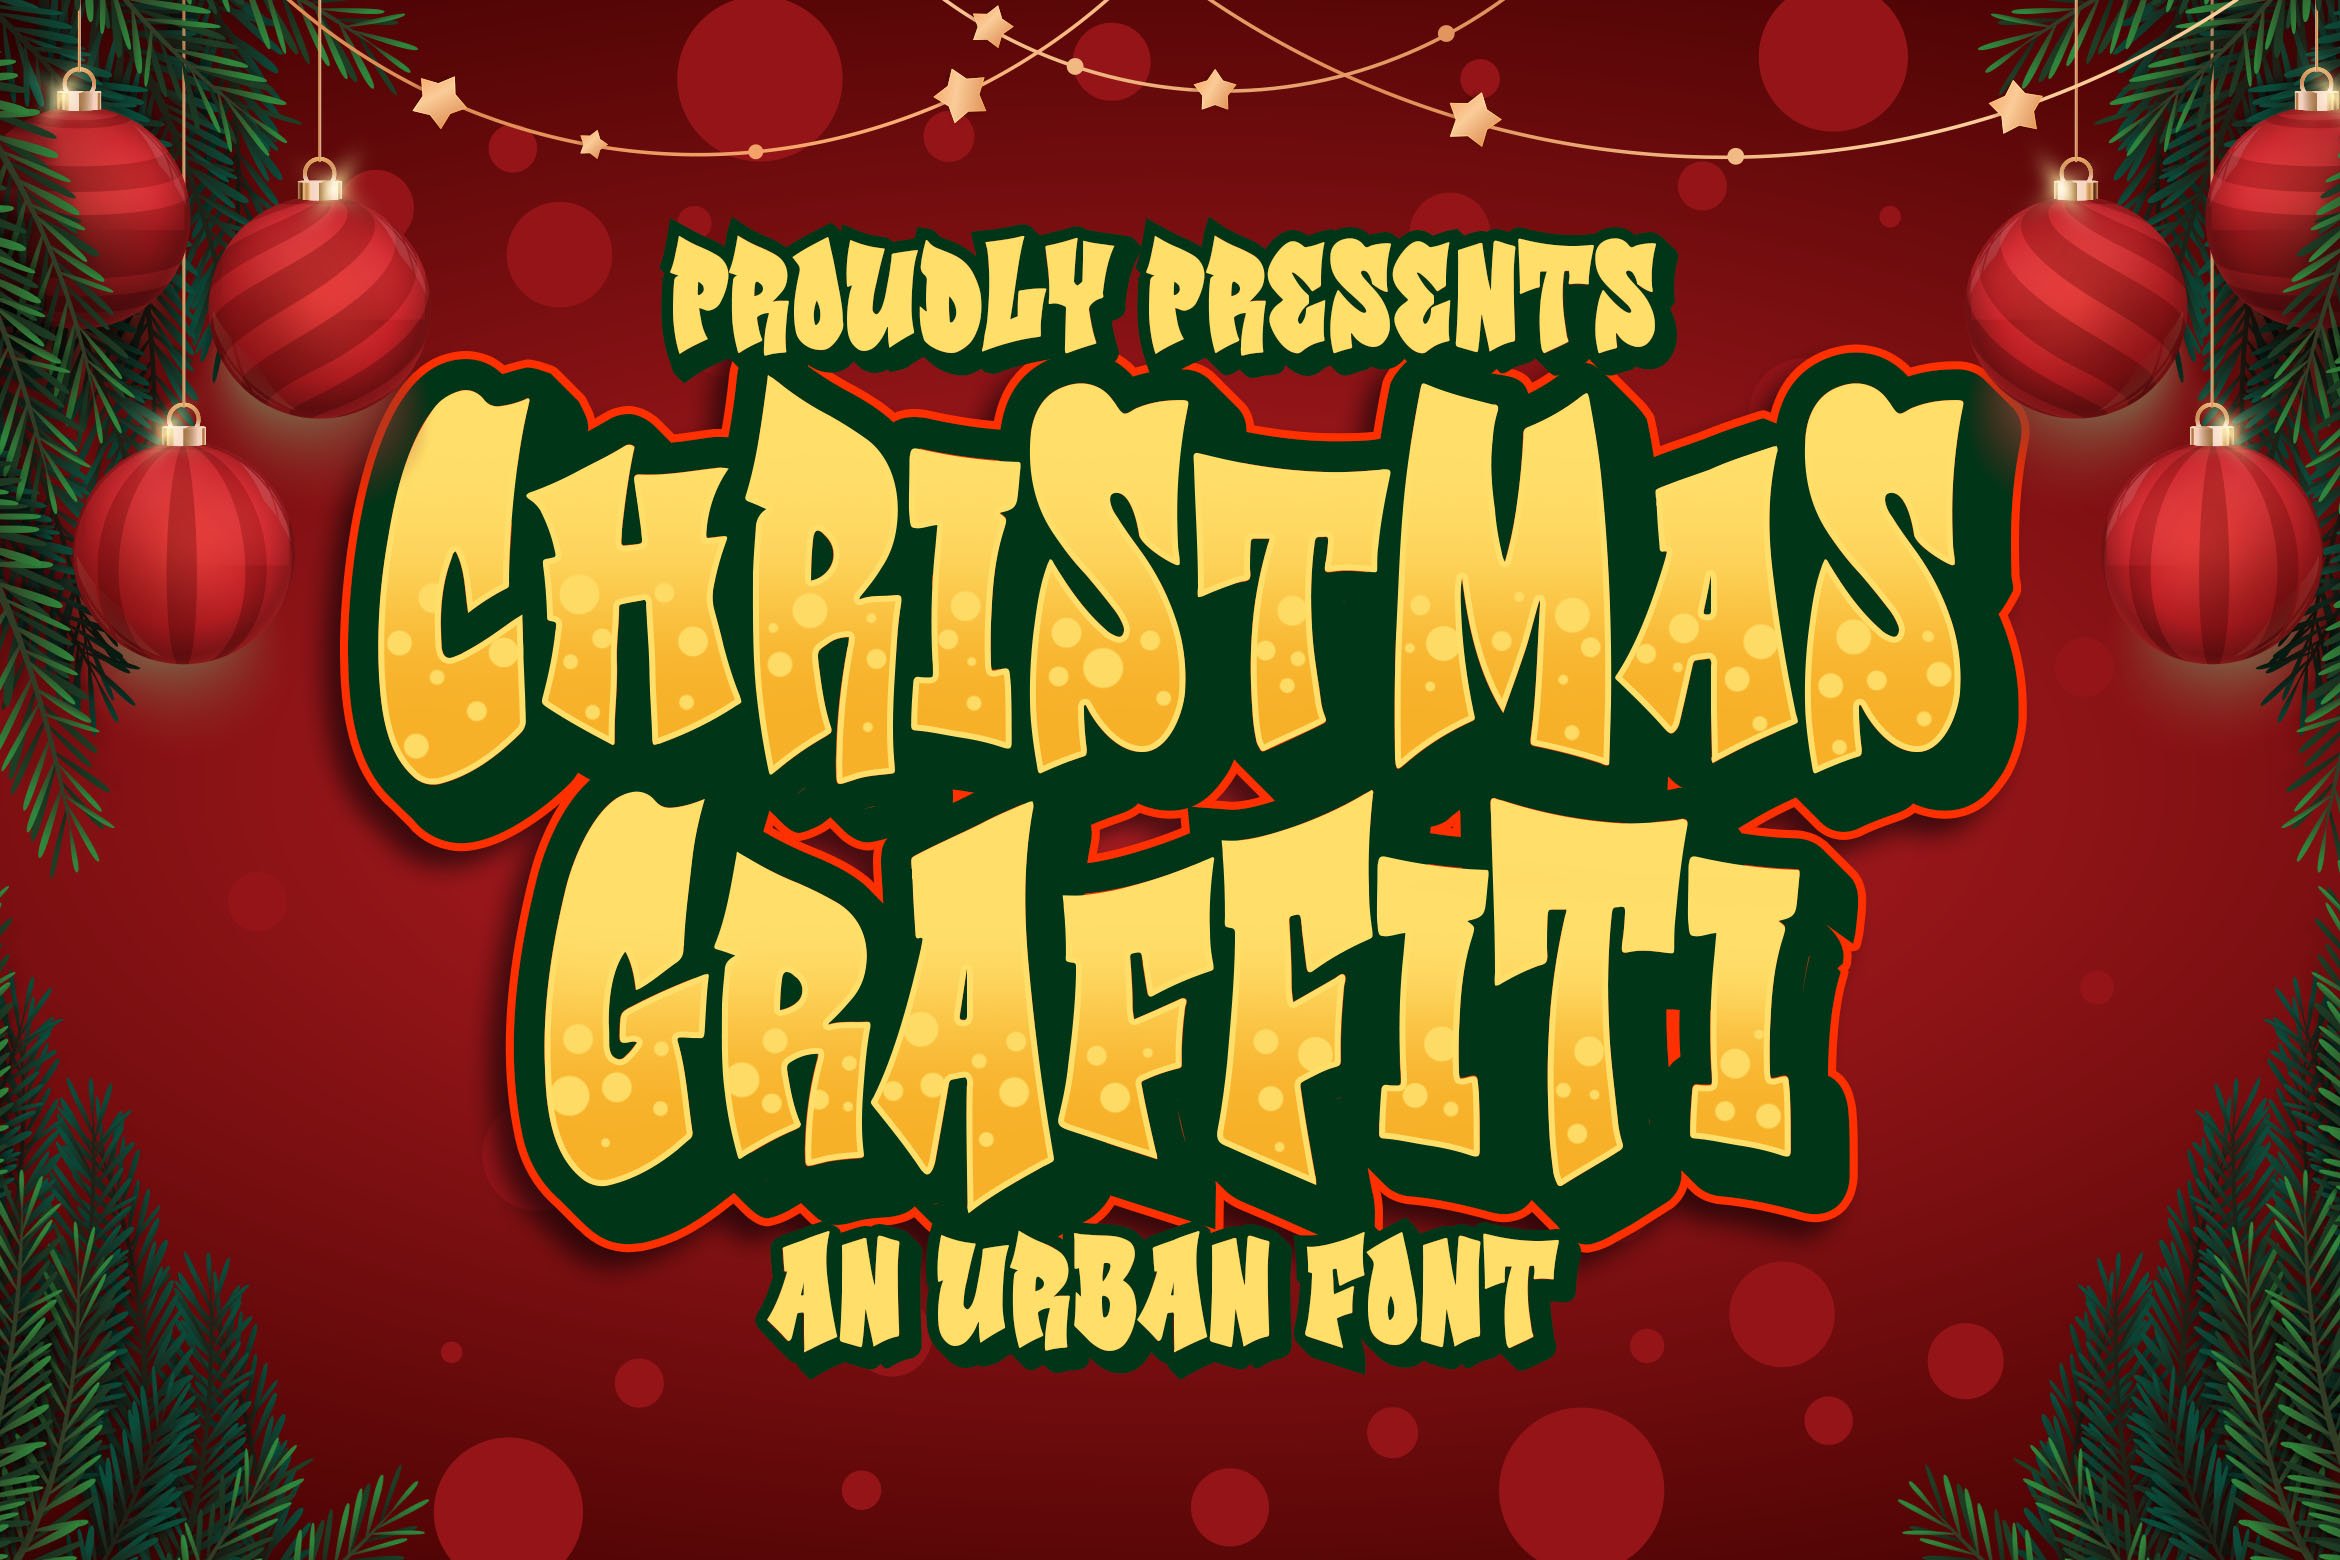 Christmas Graffiti an Urban Font cover image.